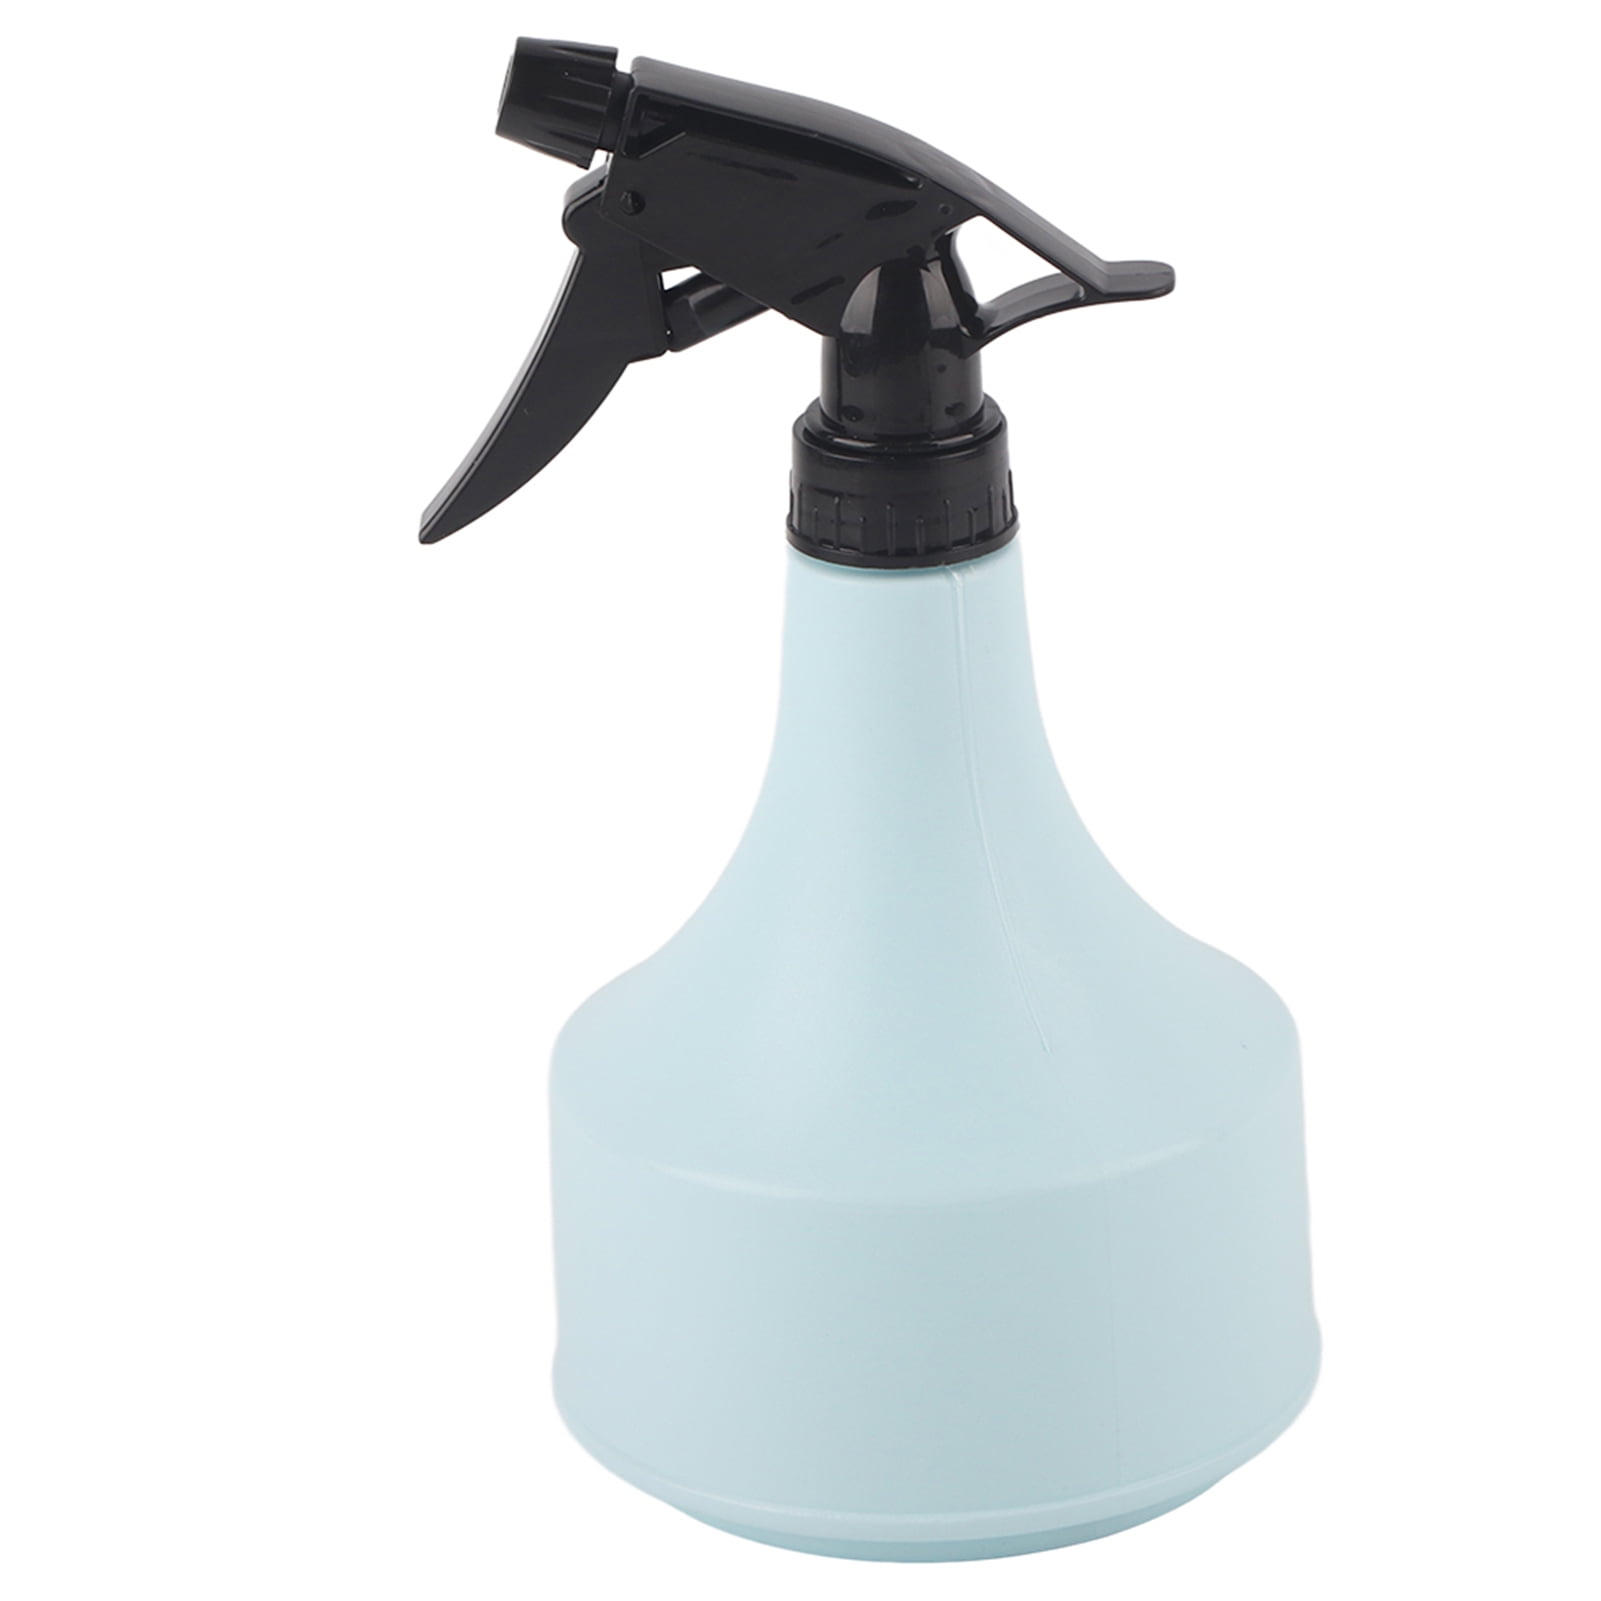 4pcs Spray Bottle Trigger Nozzle Replacement Plastic Sprayer Heads Black US N5W0 